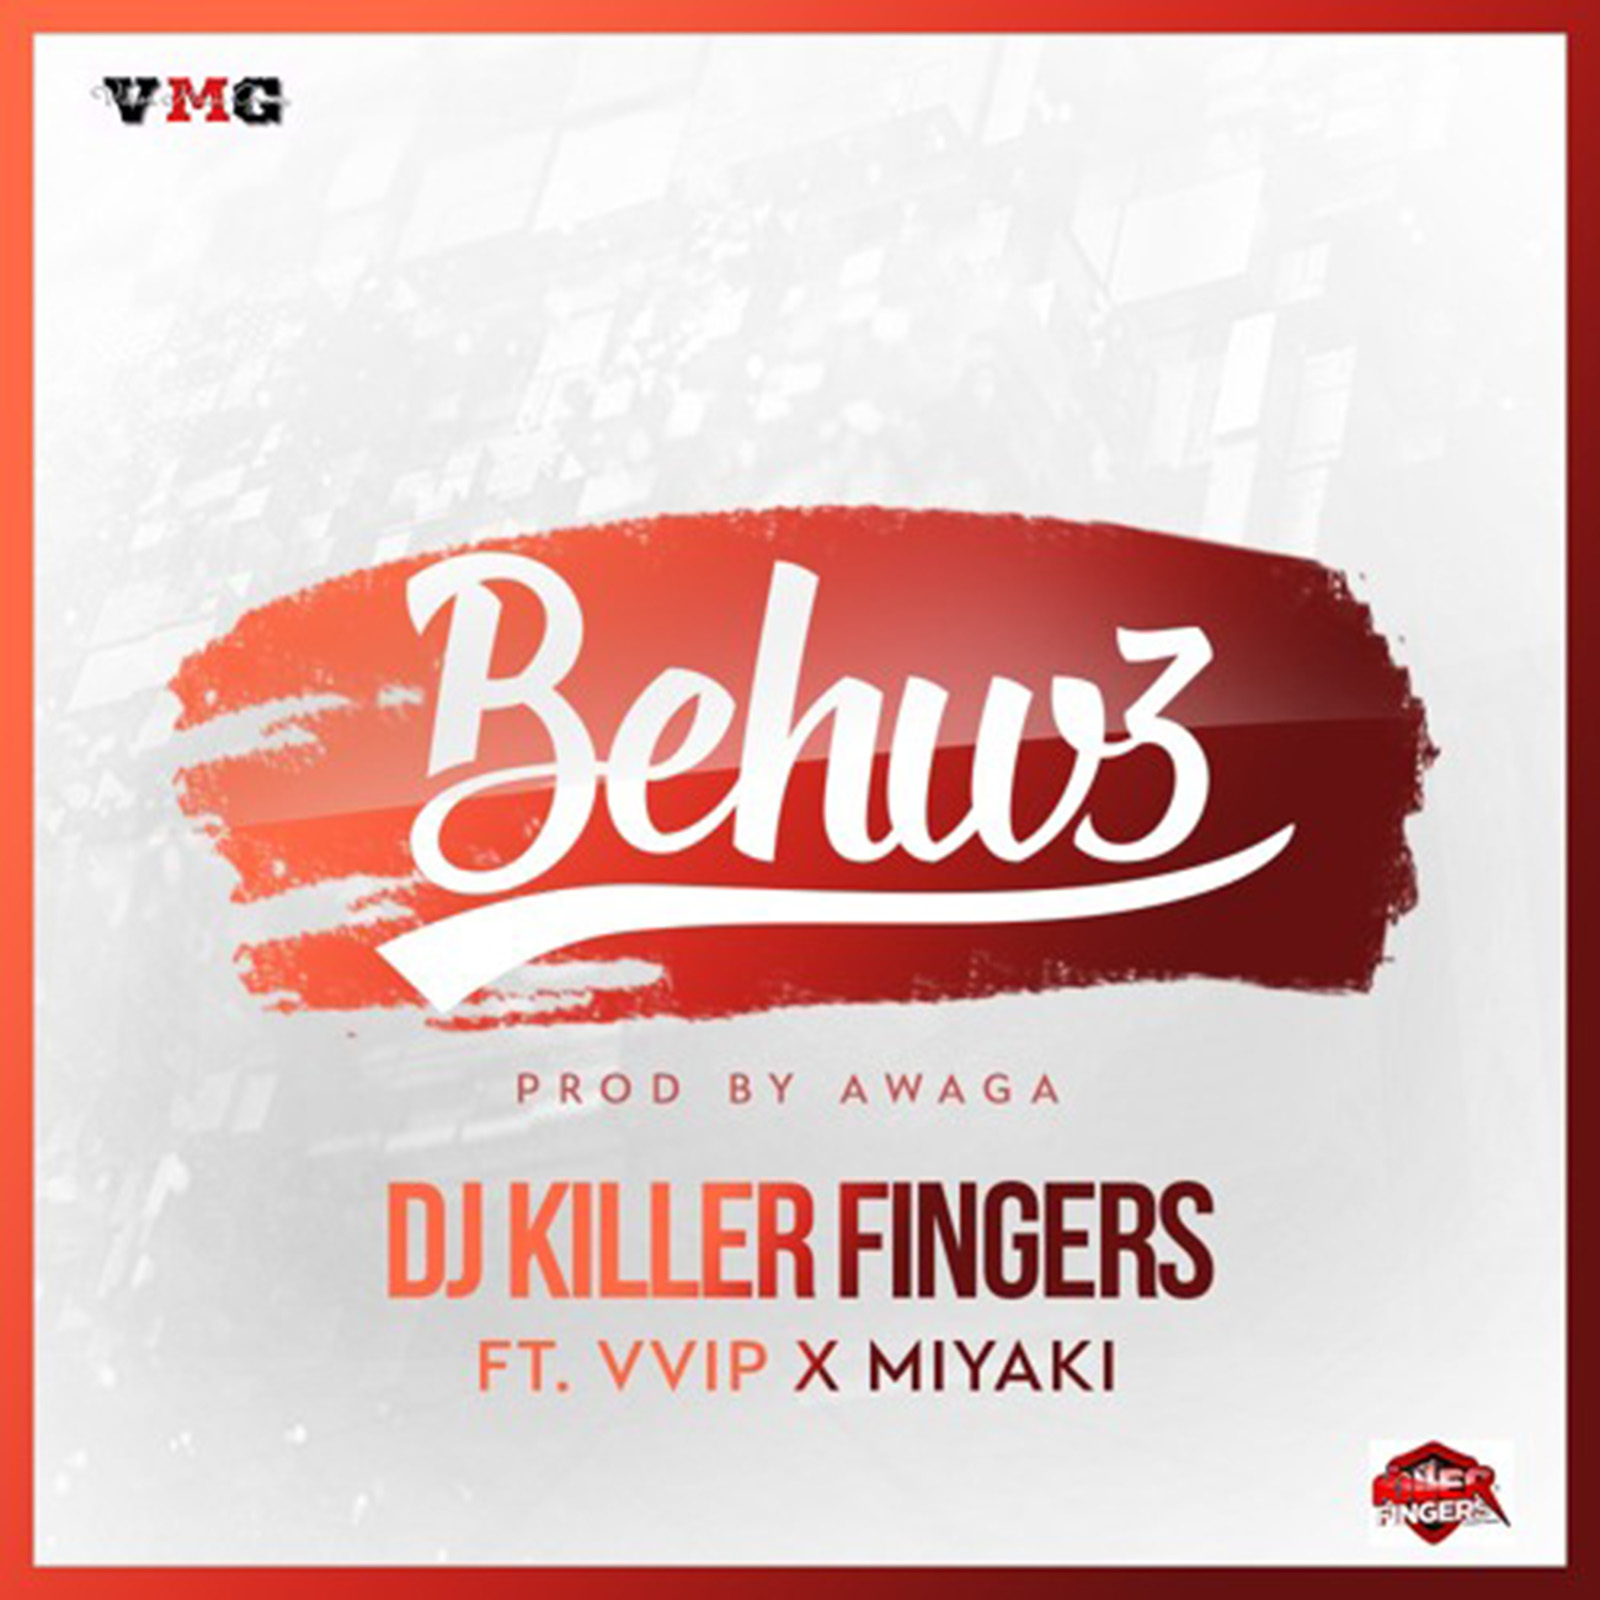 Behw3 by DJ Killer Fingers feat. VVIP & MiYaKi